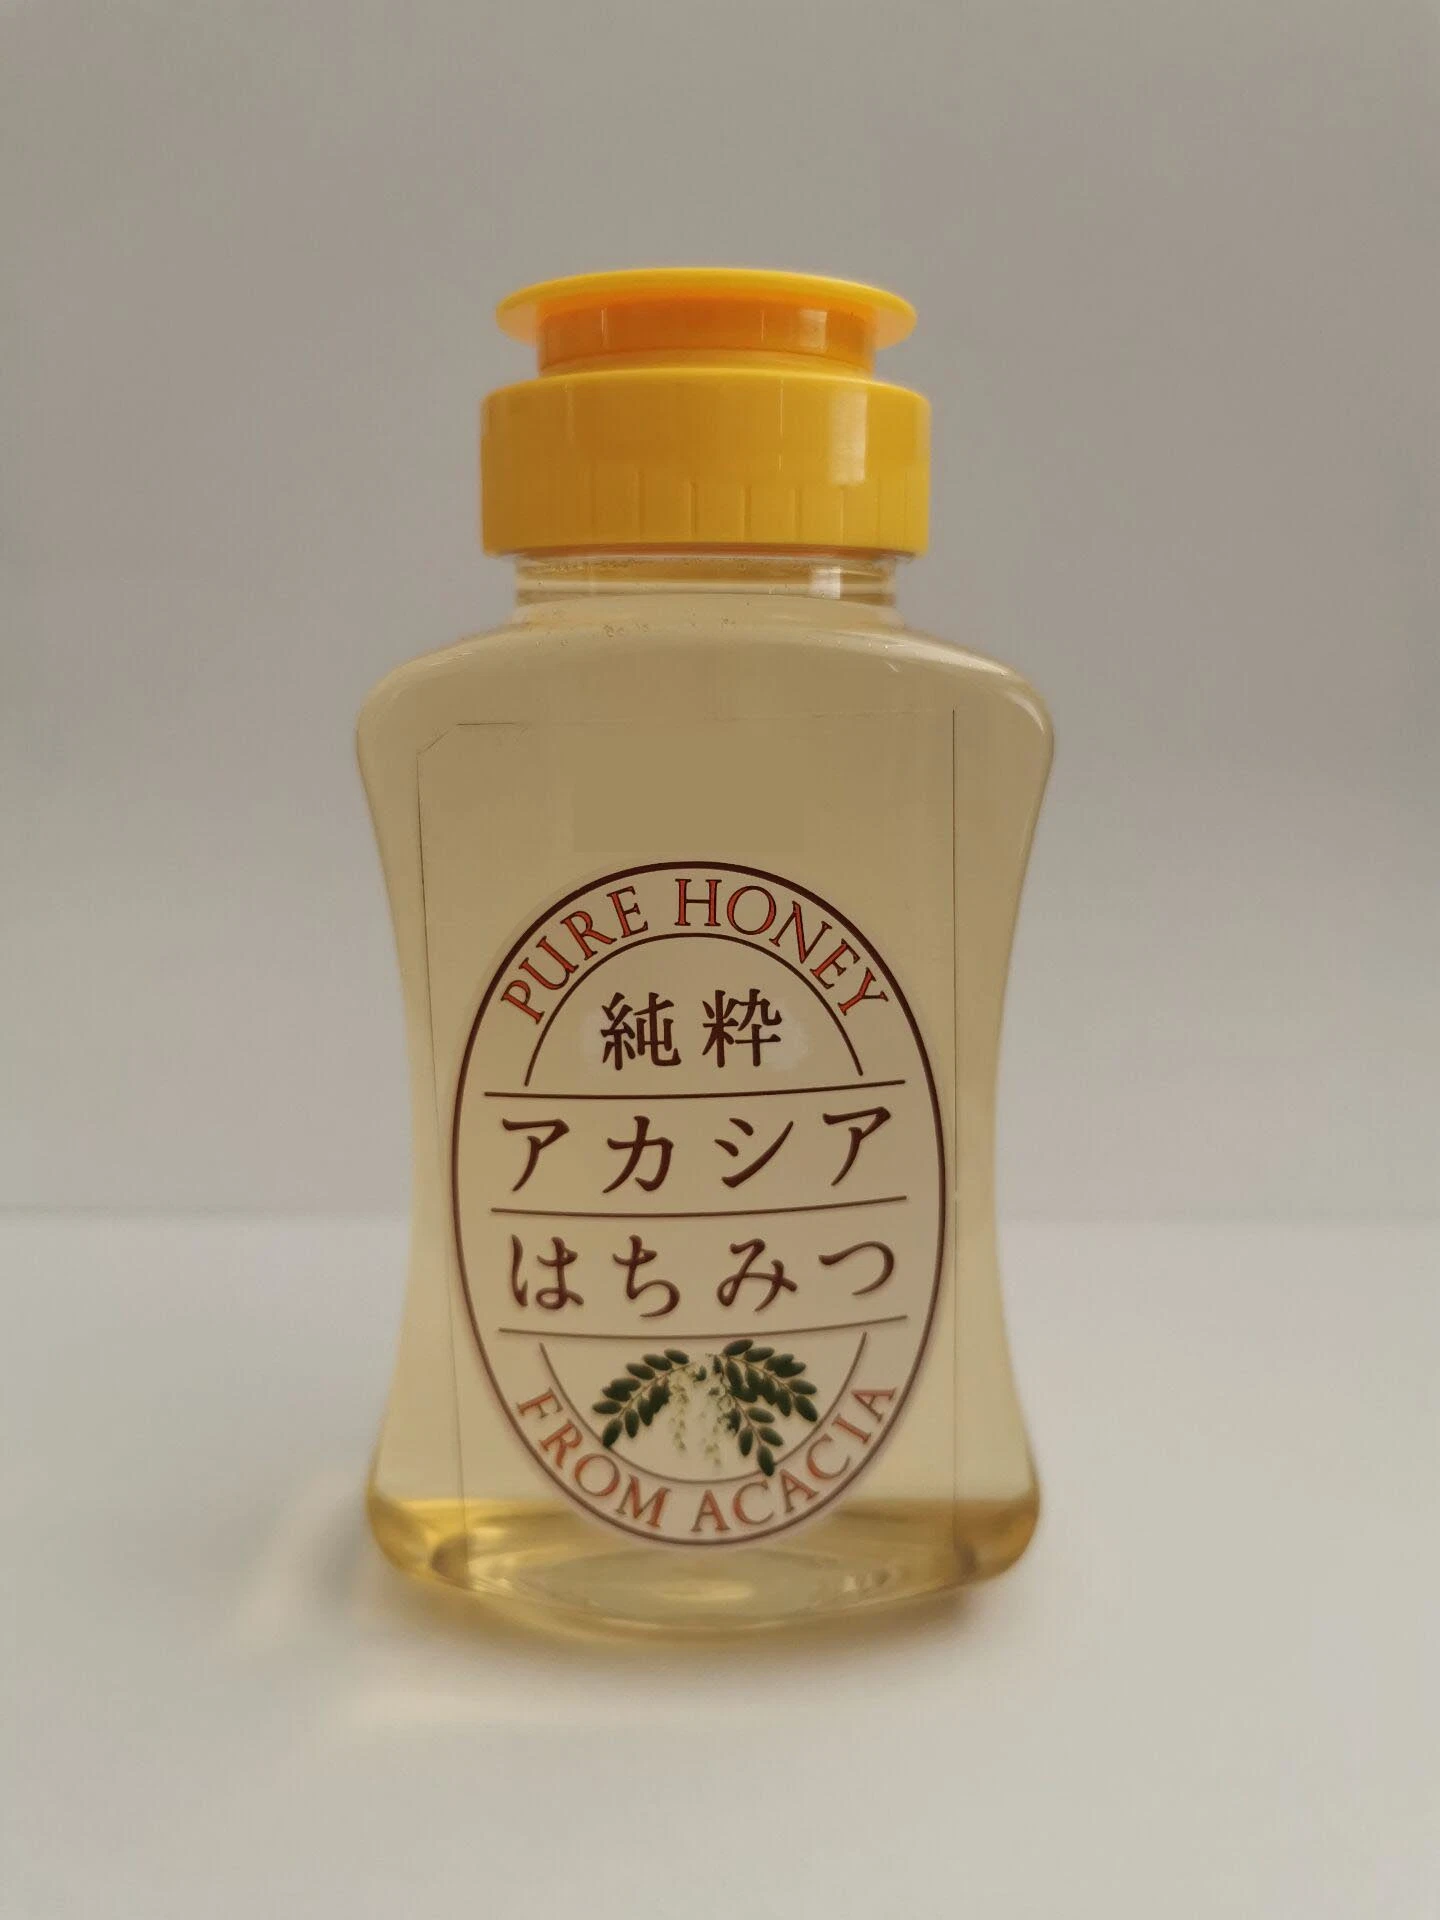 Mel puro, mel japonês, produto de mel, mel de acácia